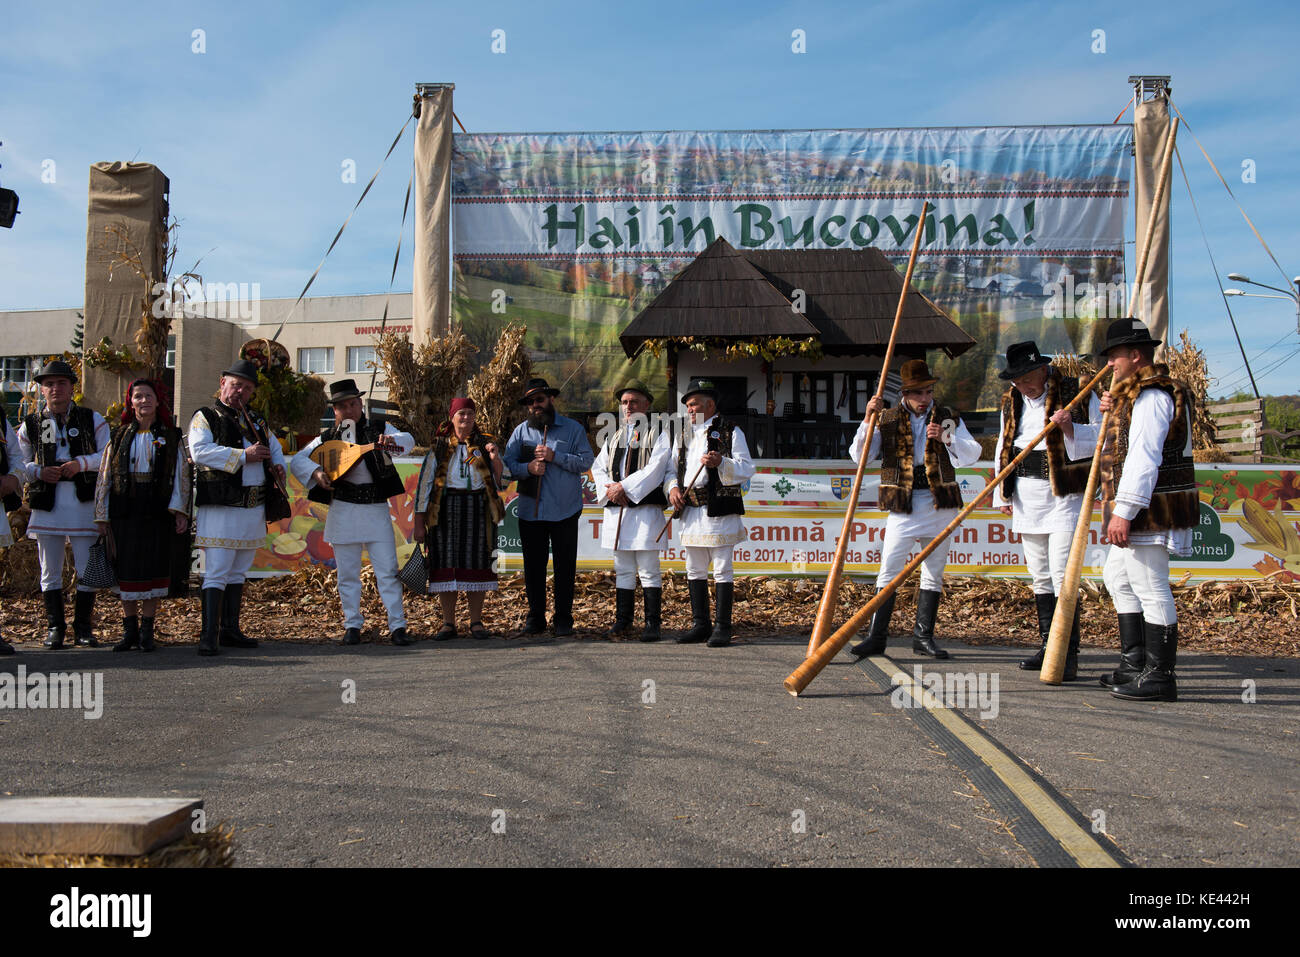 CLUJ NAPOCA, ROMANIA - OCTOBER 15, 2017: A traditional folk band performing Romanian folk music on alphorns during the Autumn Fair Stock Photo